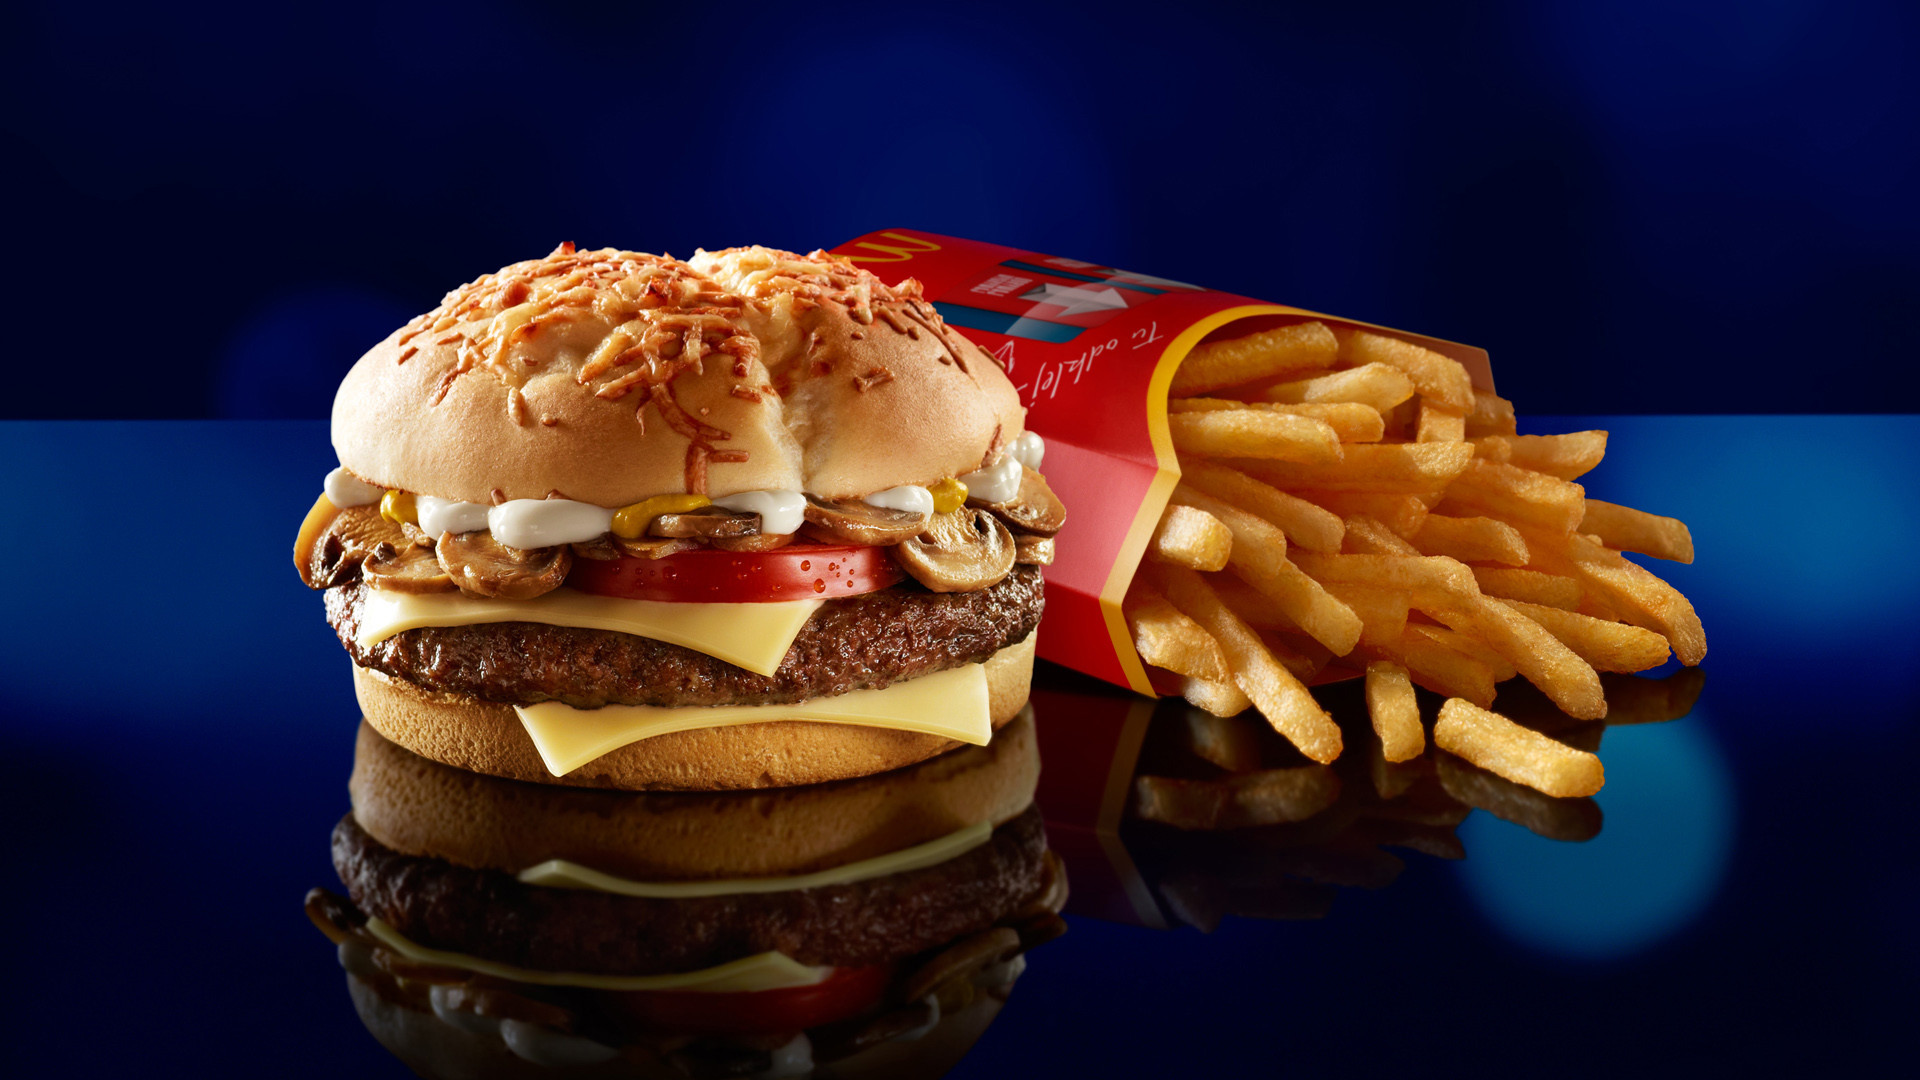 Фаст фуд реклама. Ангус бургер Кинг. Шримпбургер макдональдс. Биг Мак макдональдс. Торт из гамбургеров макдональдс.